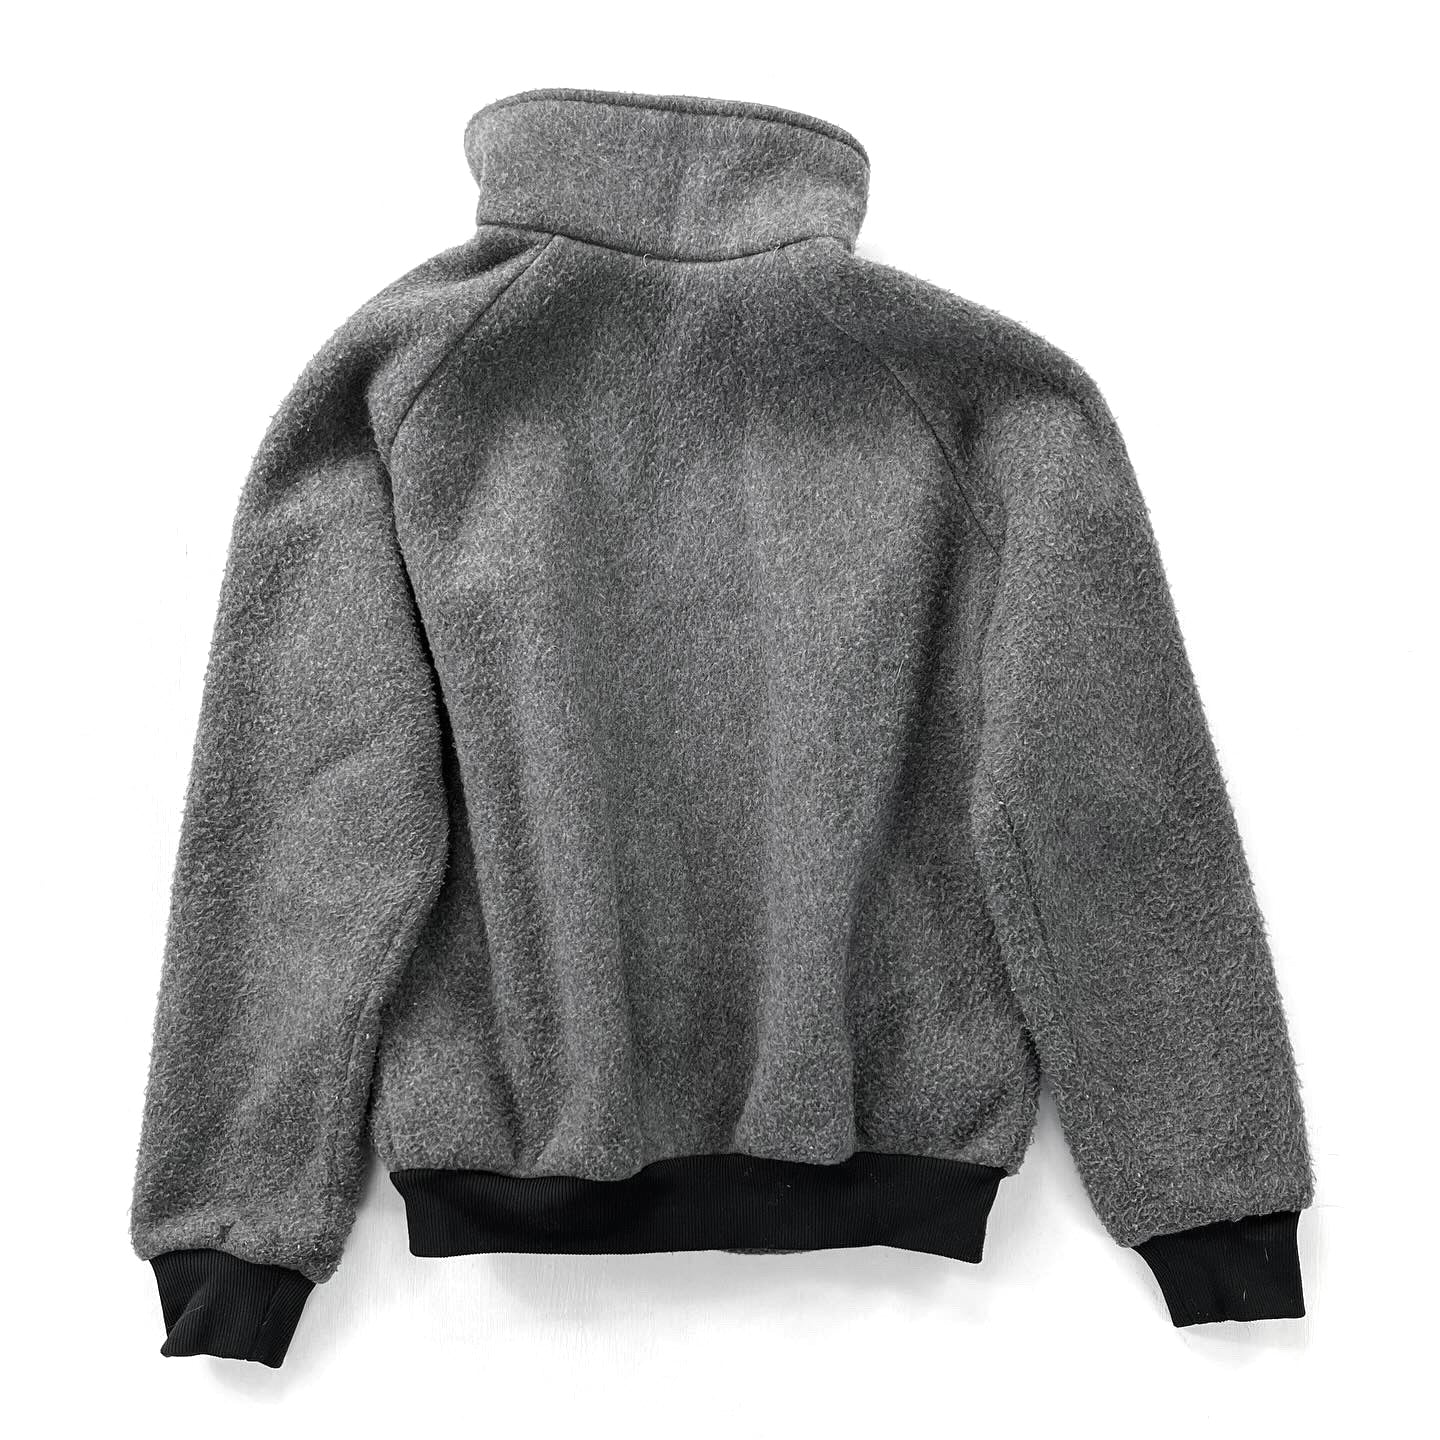 1980s REI Heavyweight Full-Zip Fleece Jacket, Charcoal Grey (M)